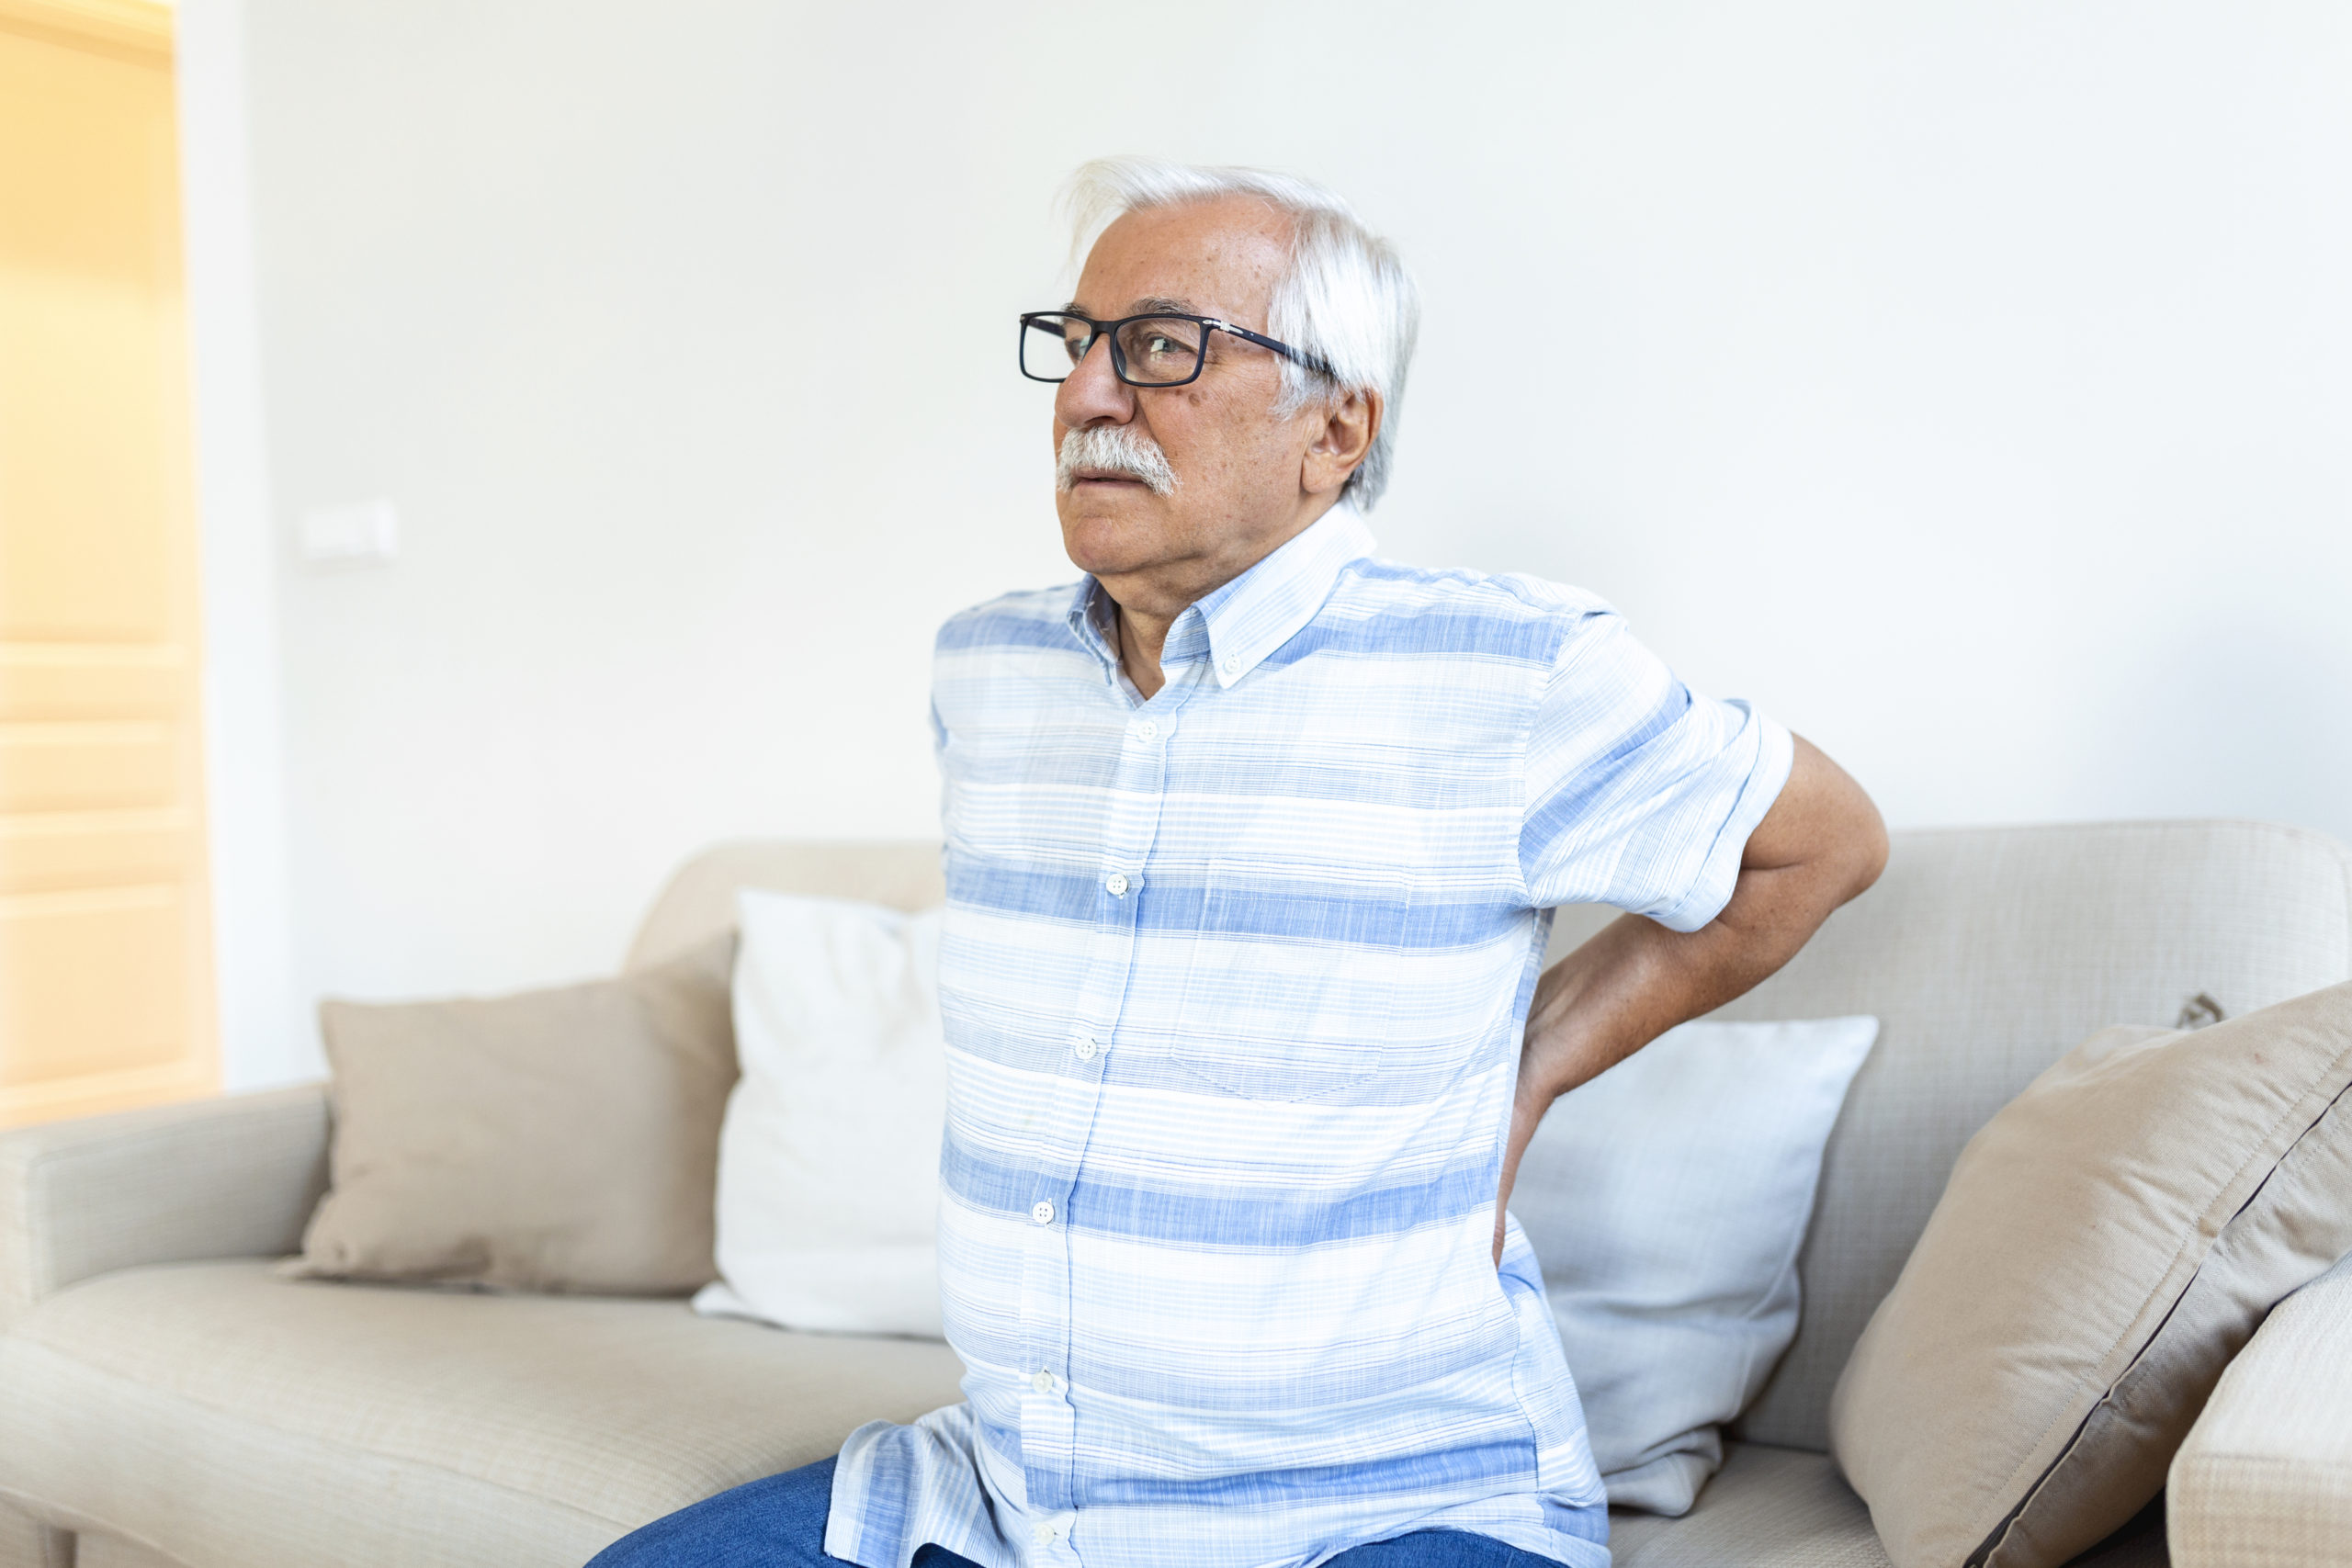 Senior man suffering from pain in back. Elderly man having discus hernia